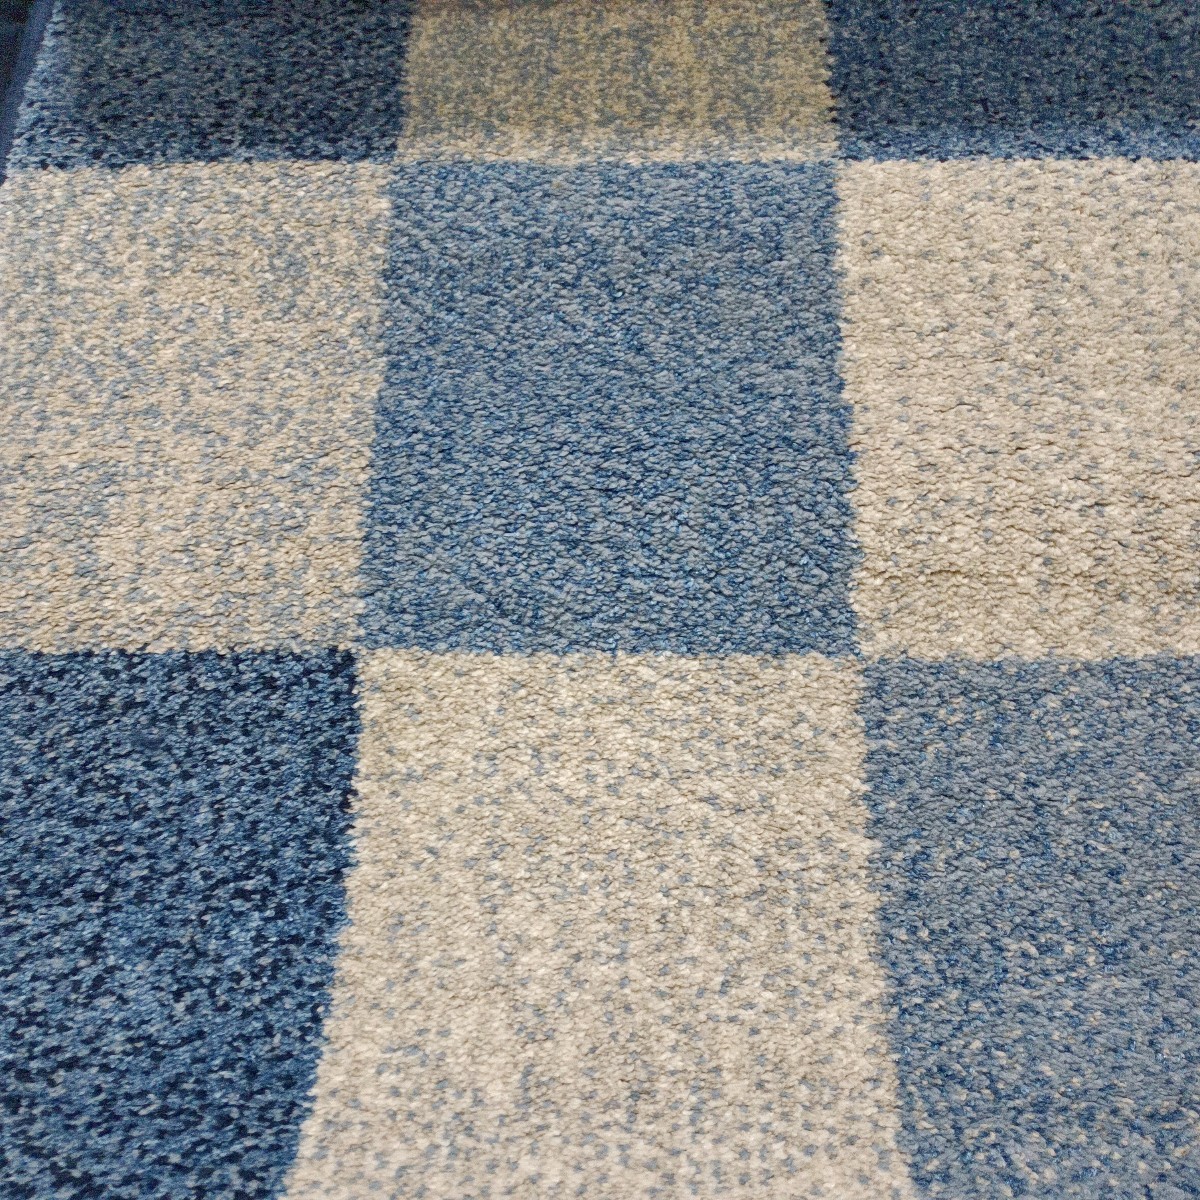 y030508e Saya n Saya n kitchen mat frosty. - block 50x180 blue natural blue rug mat 